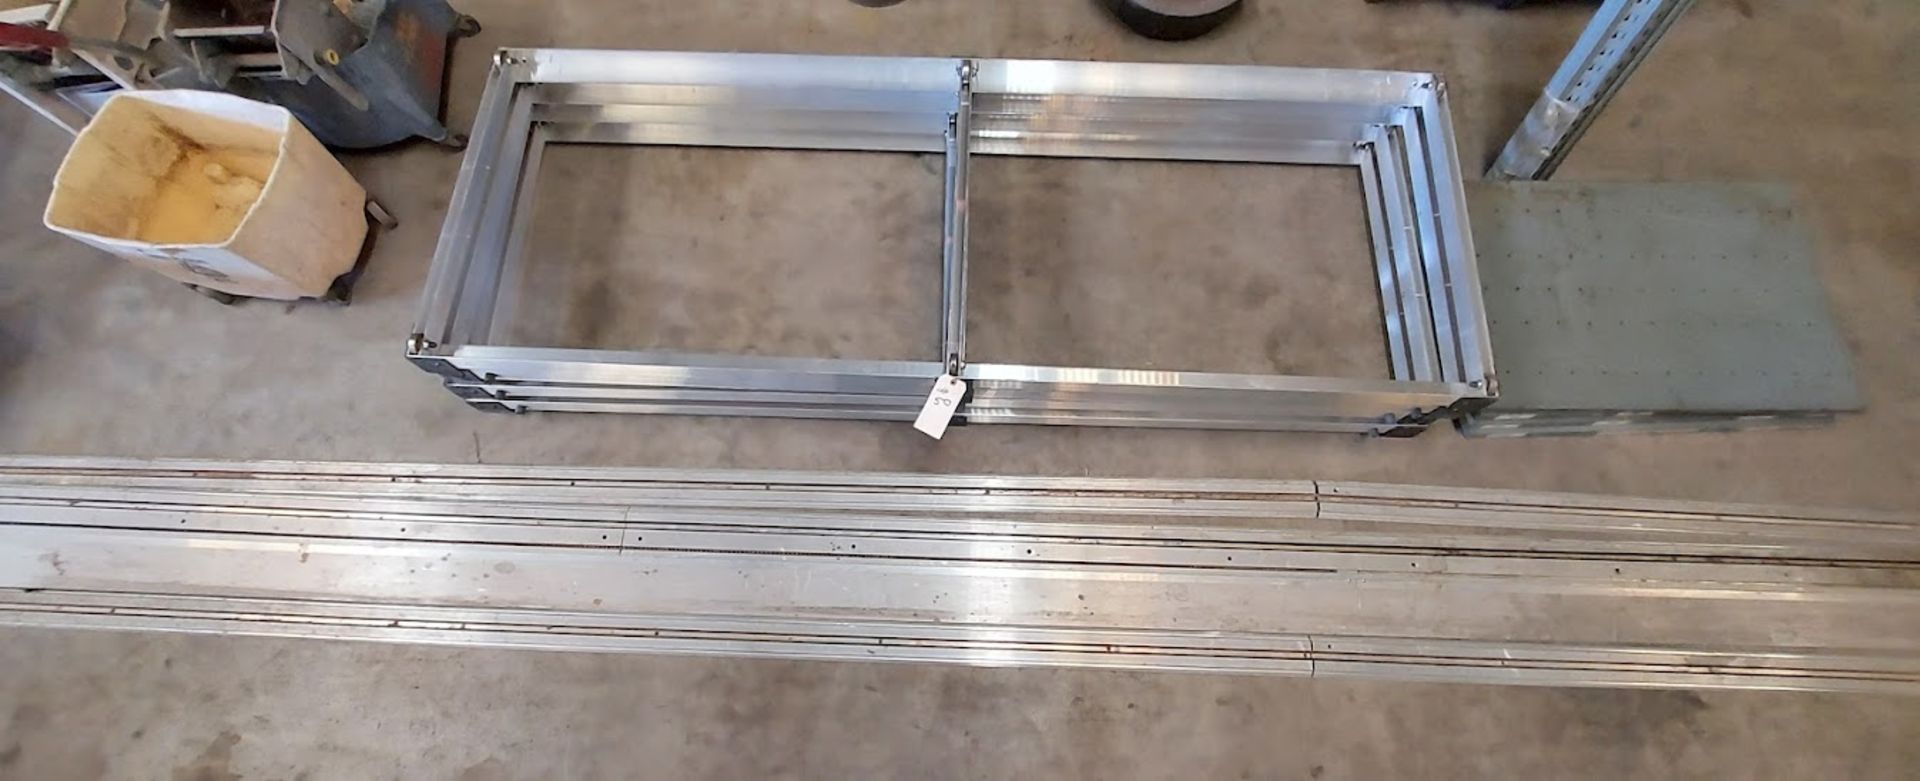 Aluminum Tracks with 4 Aluminum Carts on Wheels - Image 2 of 3